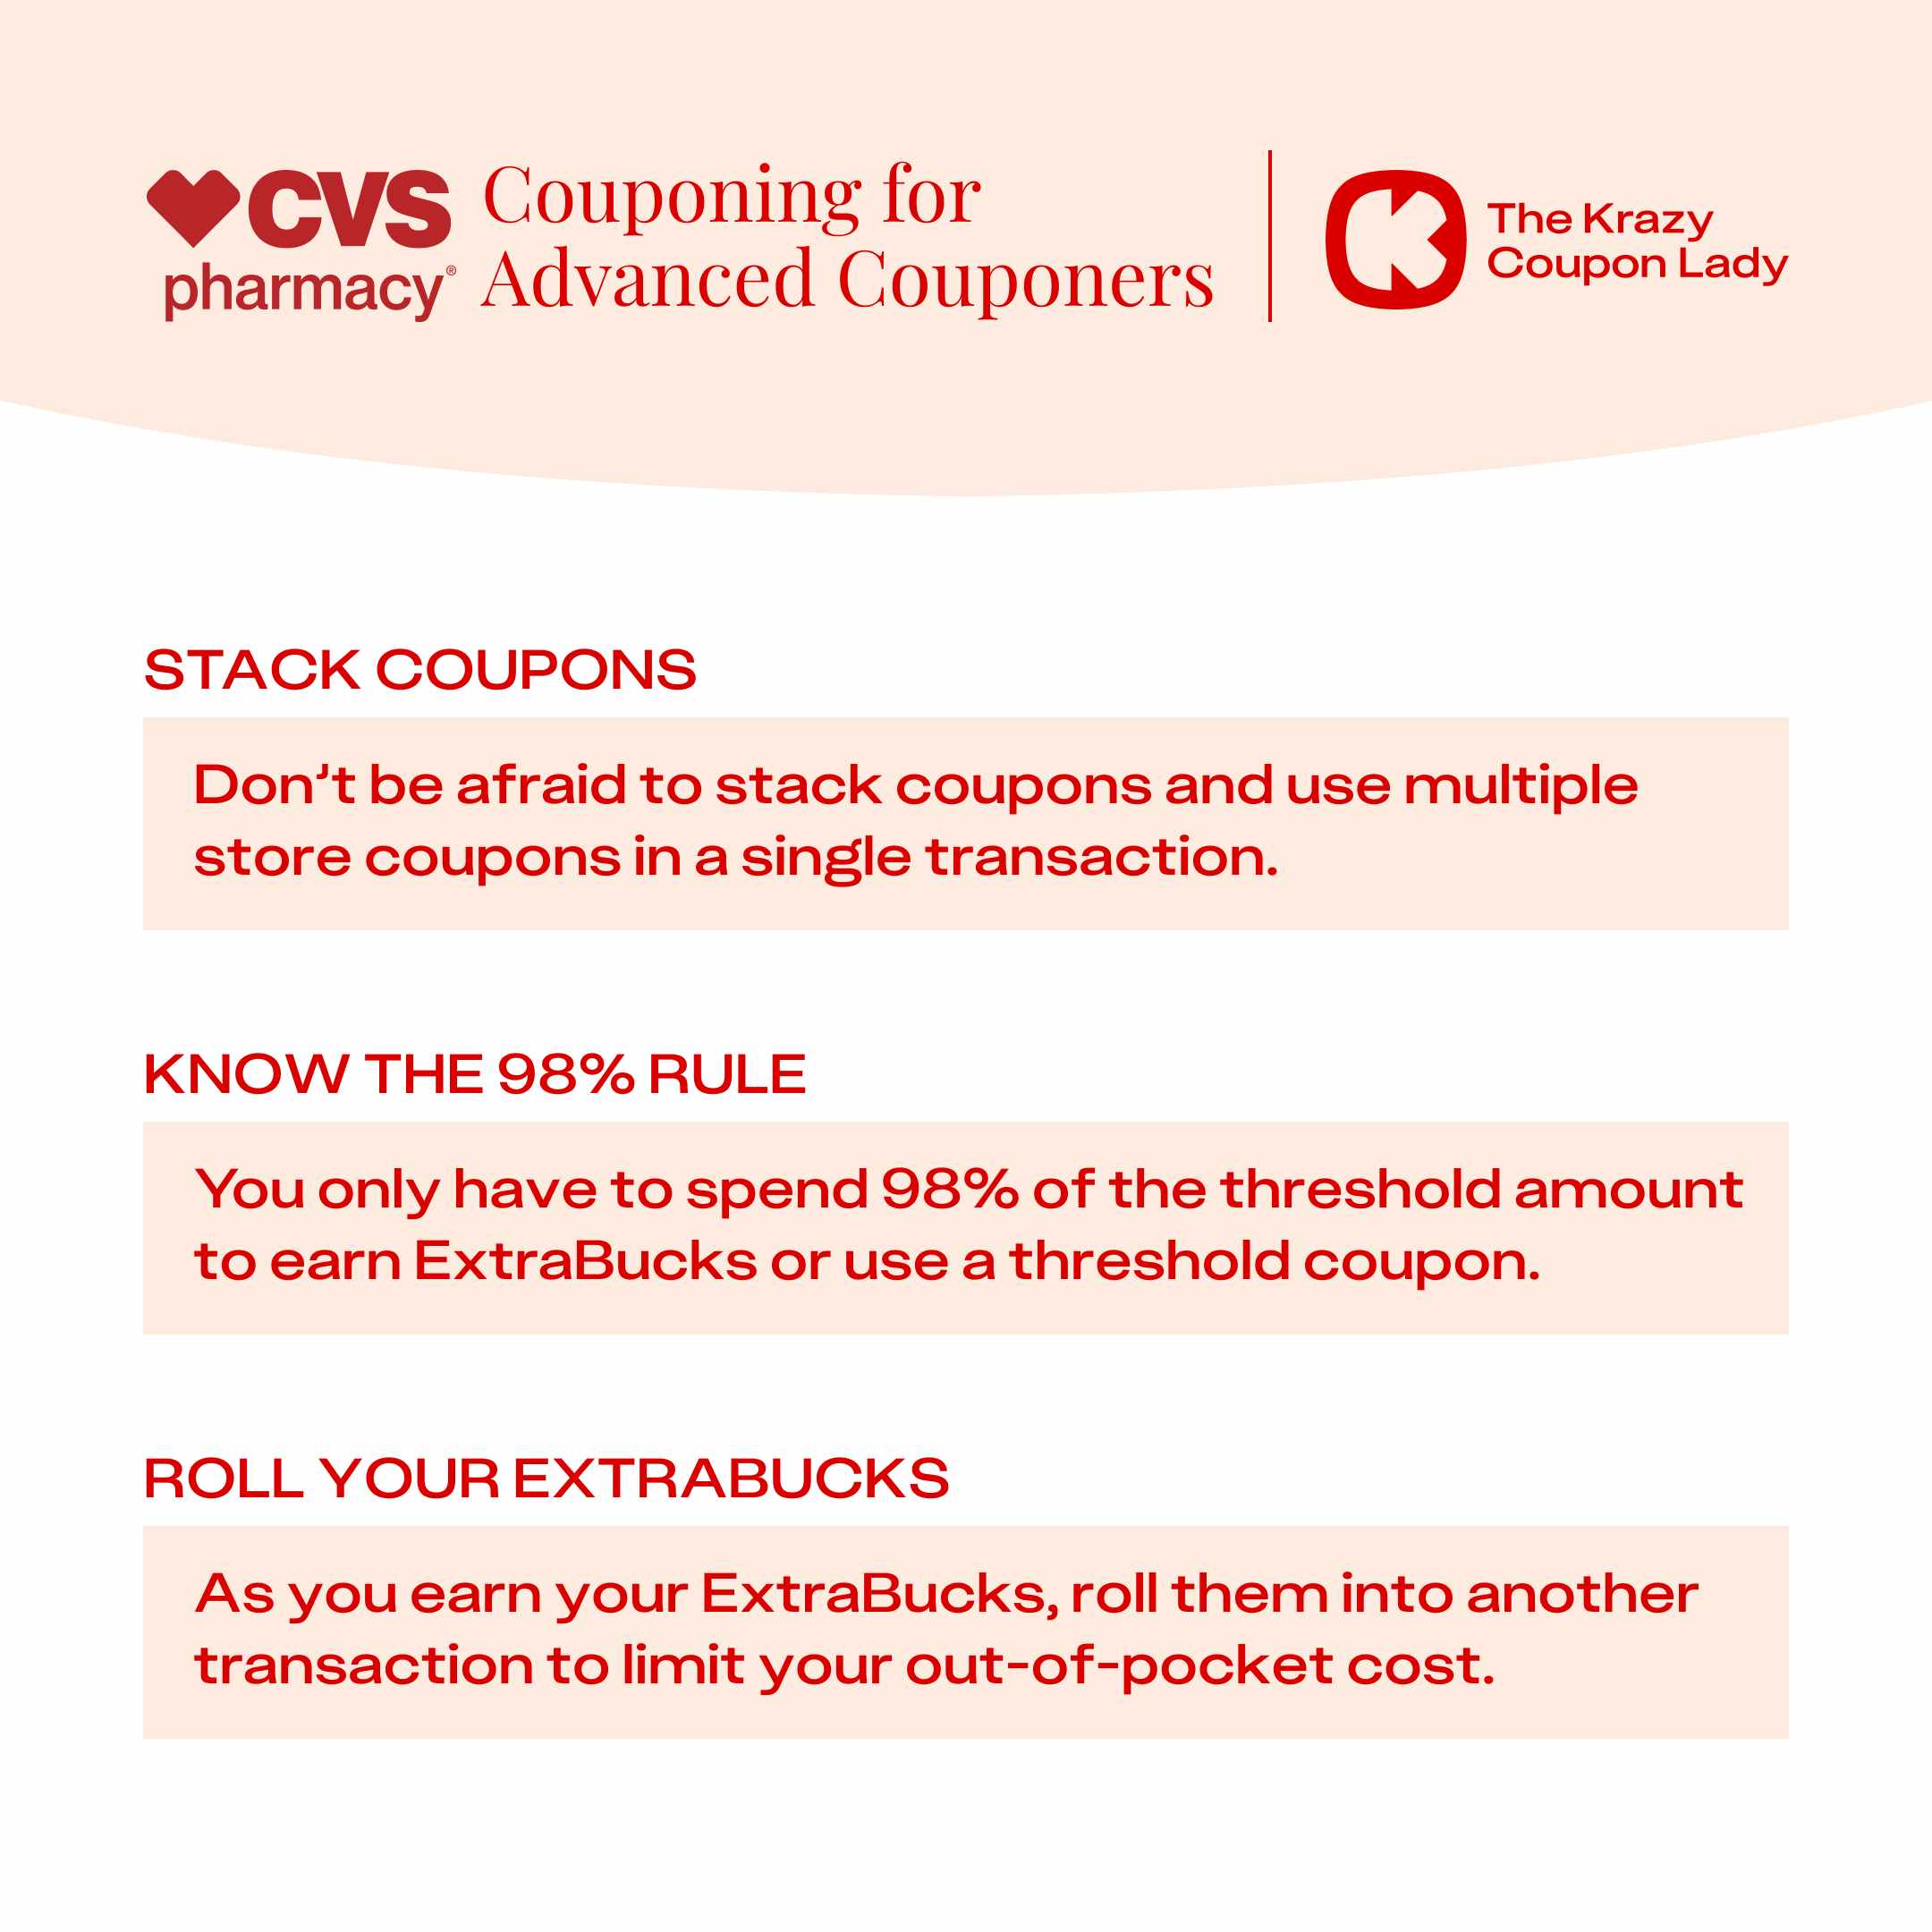 Three tips for advanced couponing at CVS